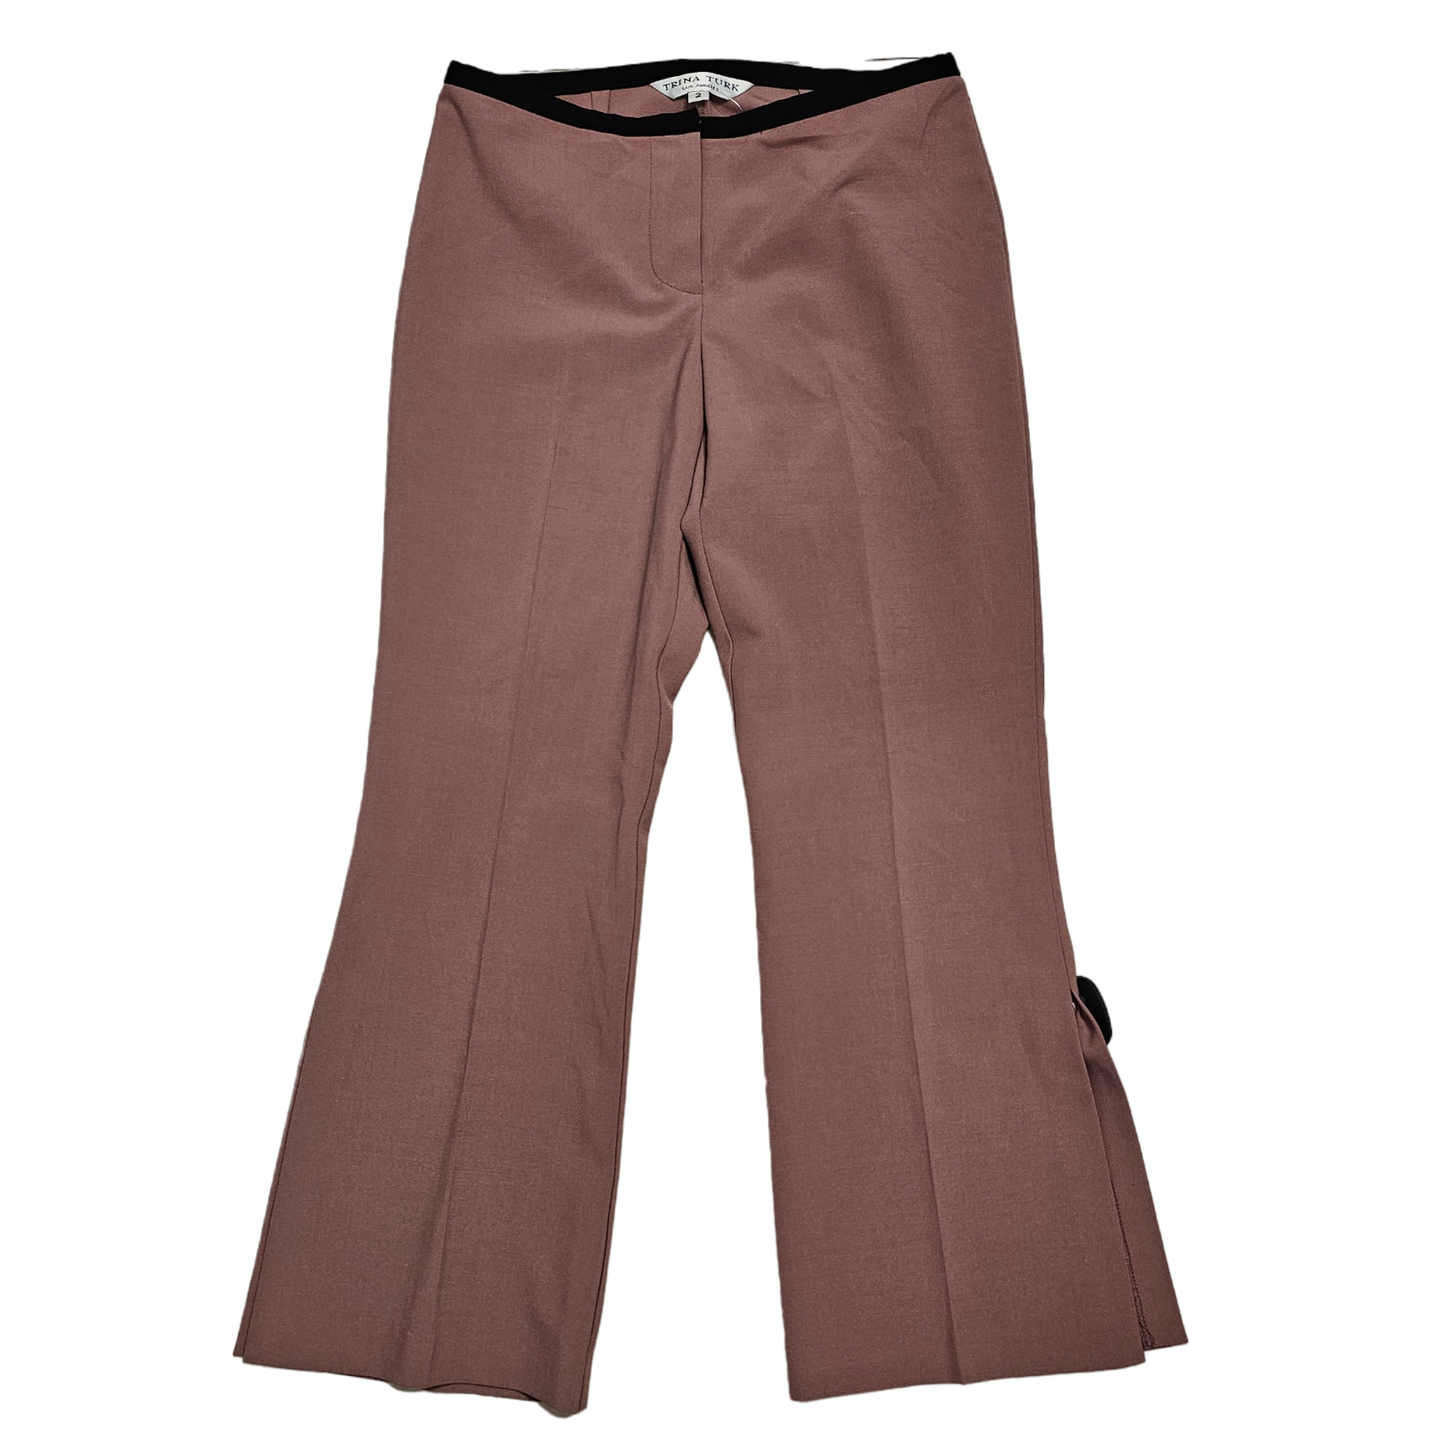 Pants Designer By Trina Turk  Size: 2